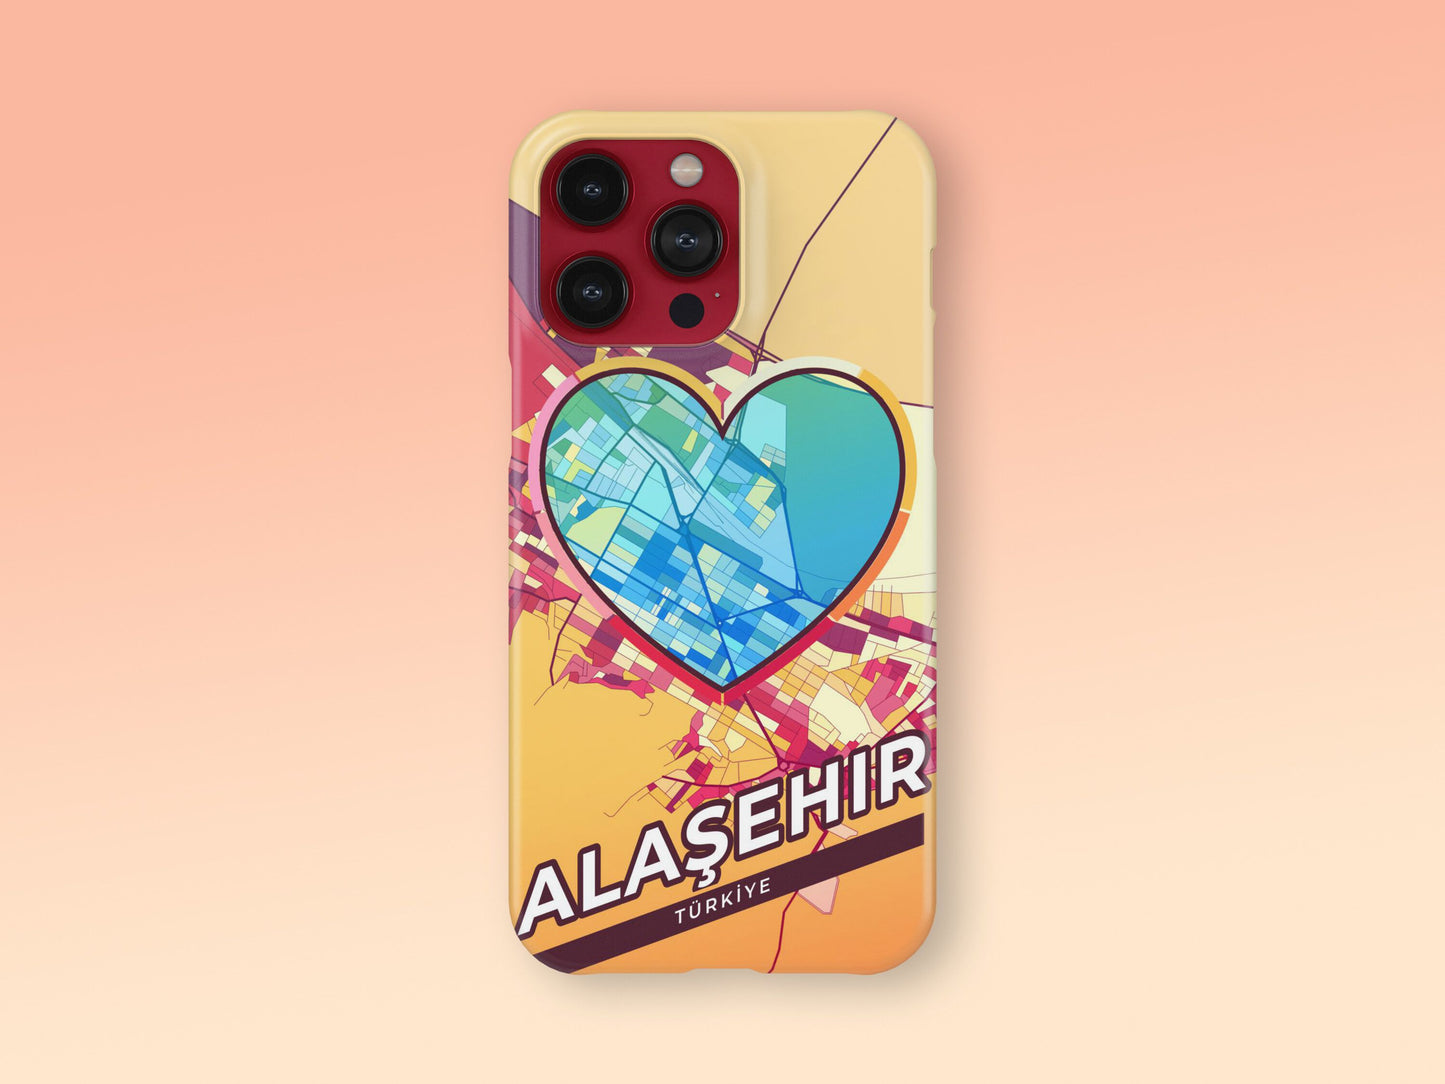 Alaşehir Turkey slim phone case with colorful icon. Birthday, wedding or housewarming gift. Couple match cases. 2